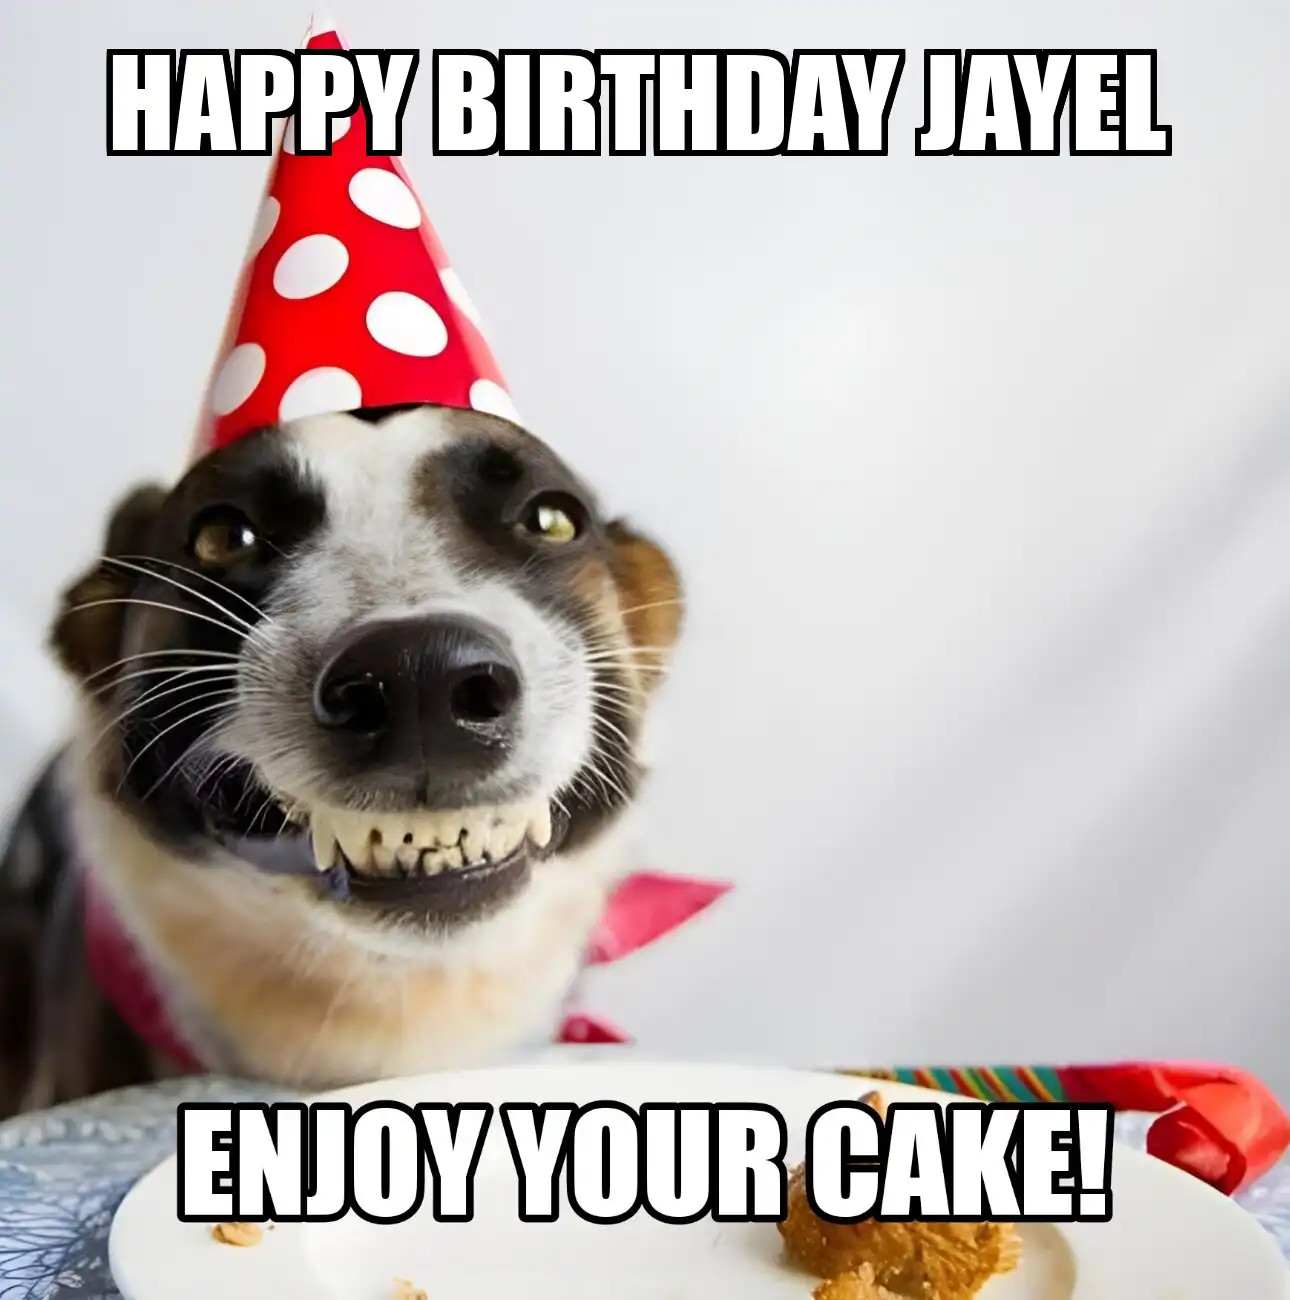 Happy Birthday Jayel Enjoy Your Cake Dog Meme